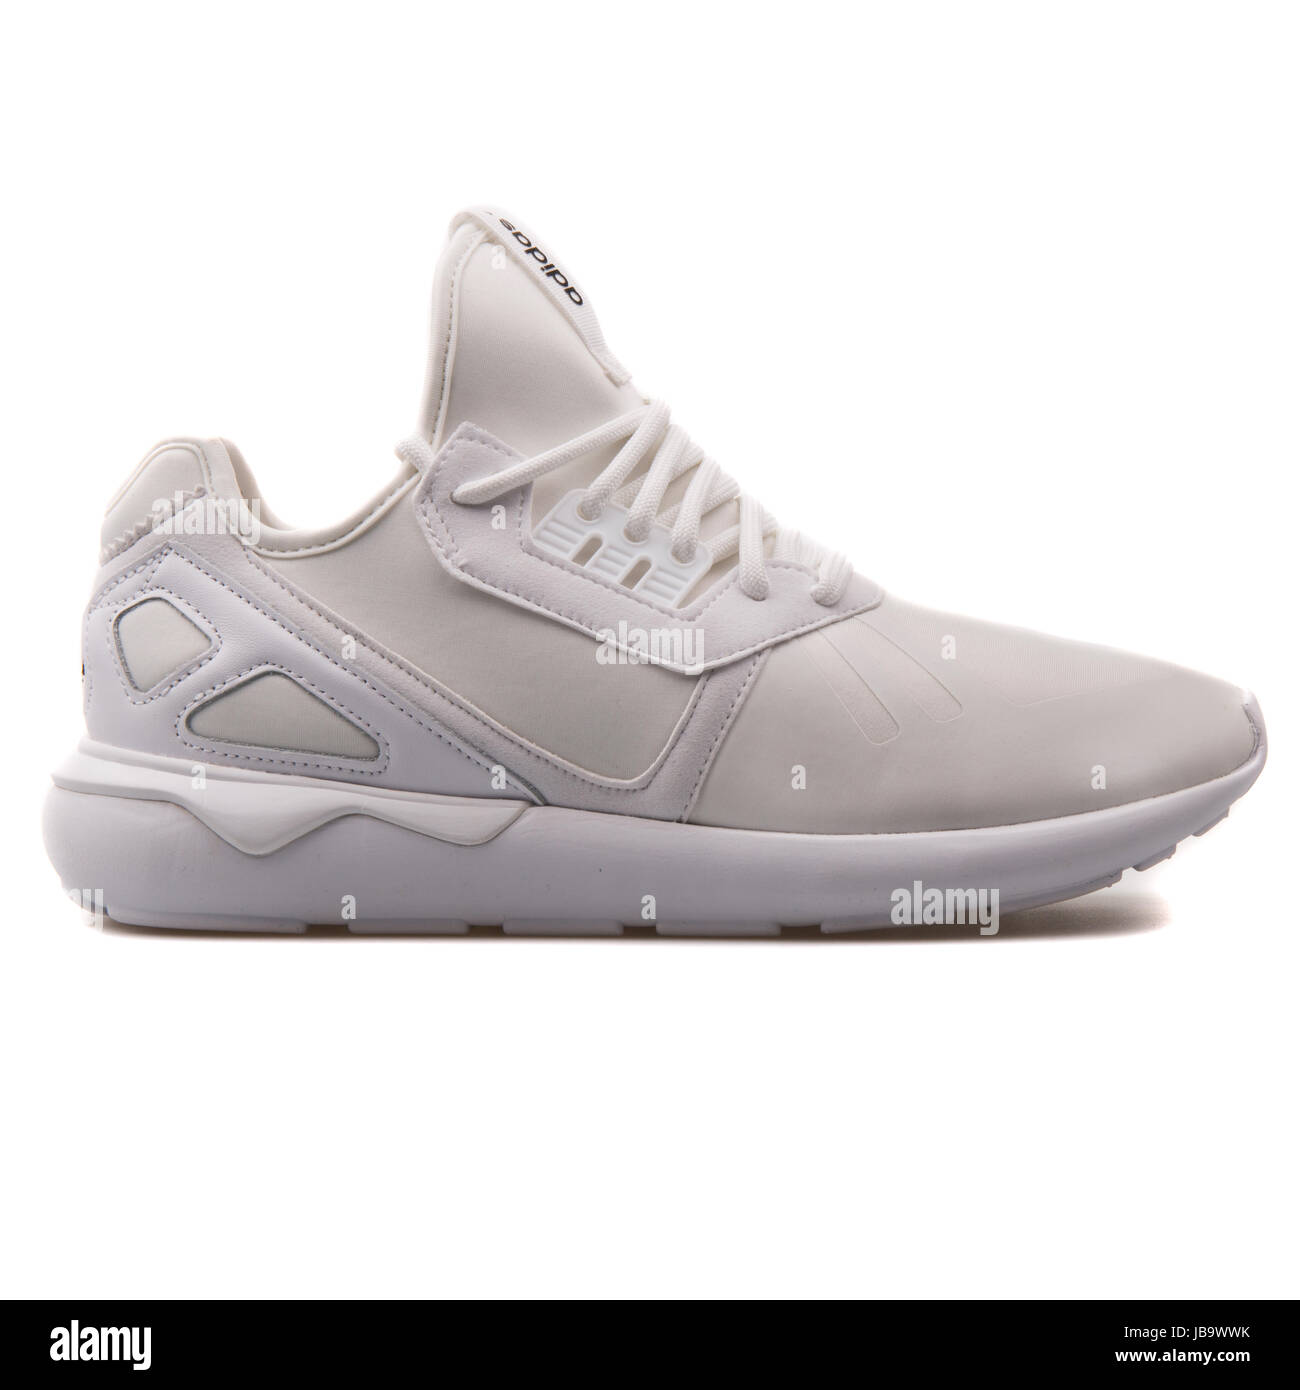 Adidas Tubular Runner White Men's Running Shoes - S83141 Stock Photo - Alamy